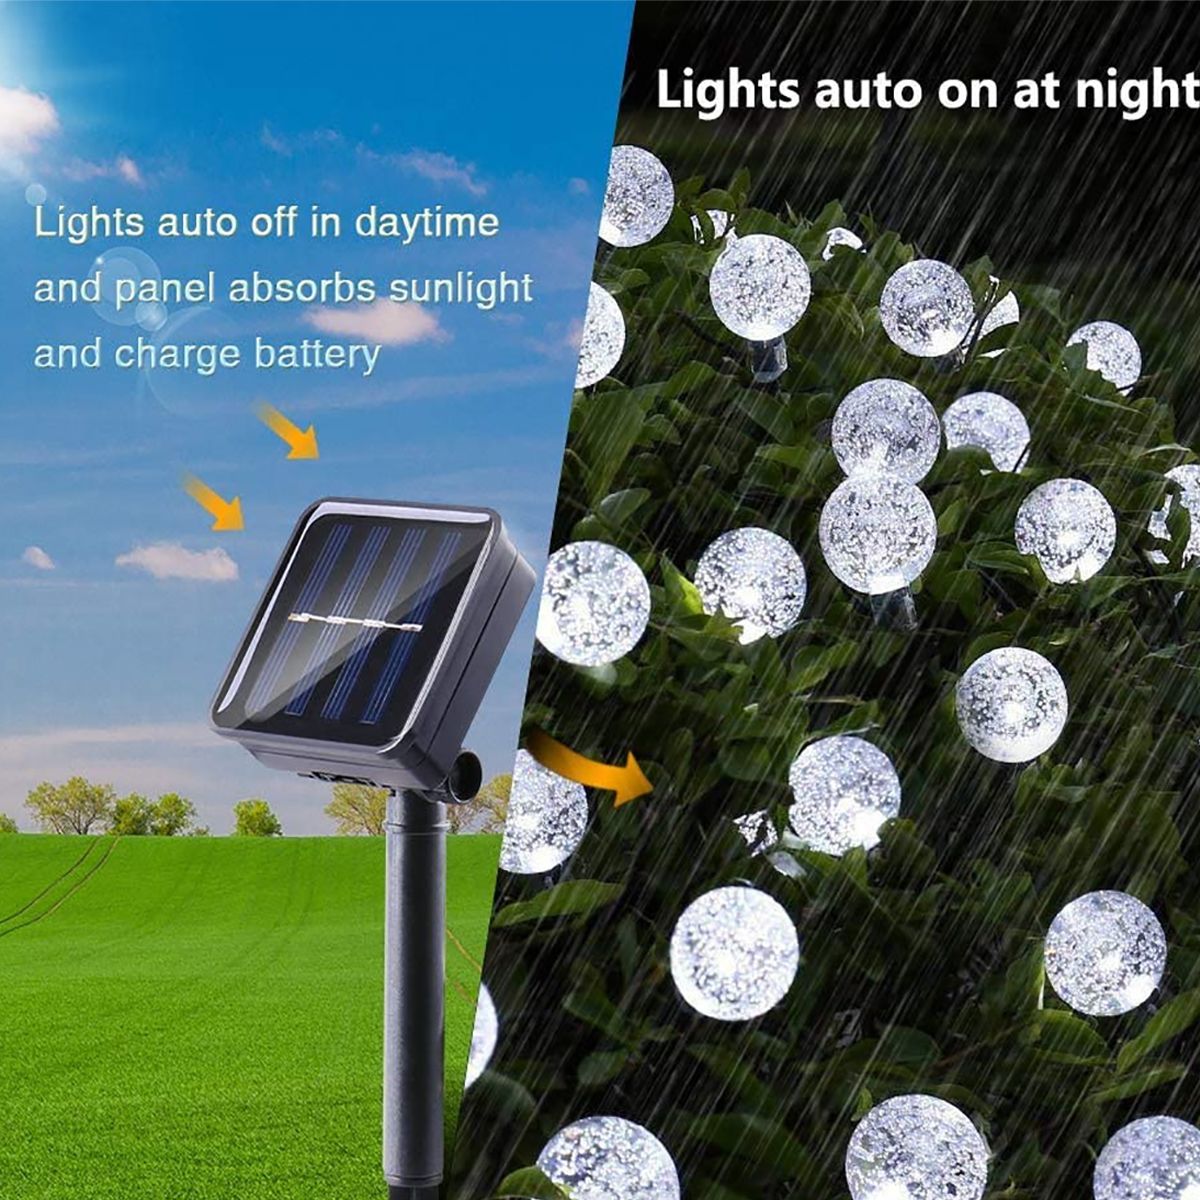 50100200LEDs-Solar-String-Fairy-Light-Ball-Lamp-Garden-Outdoor-Waterproof-Home-Party-Decoration-Chri-1730376